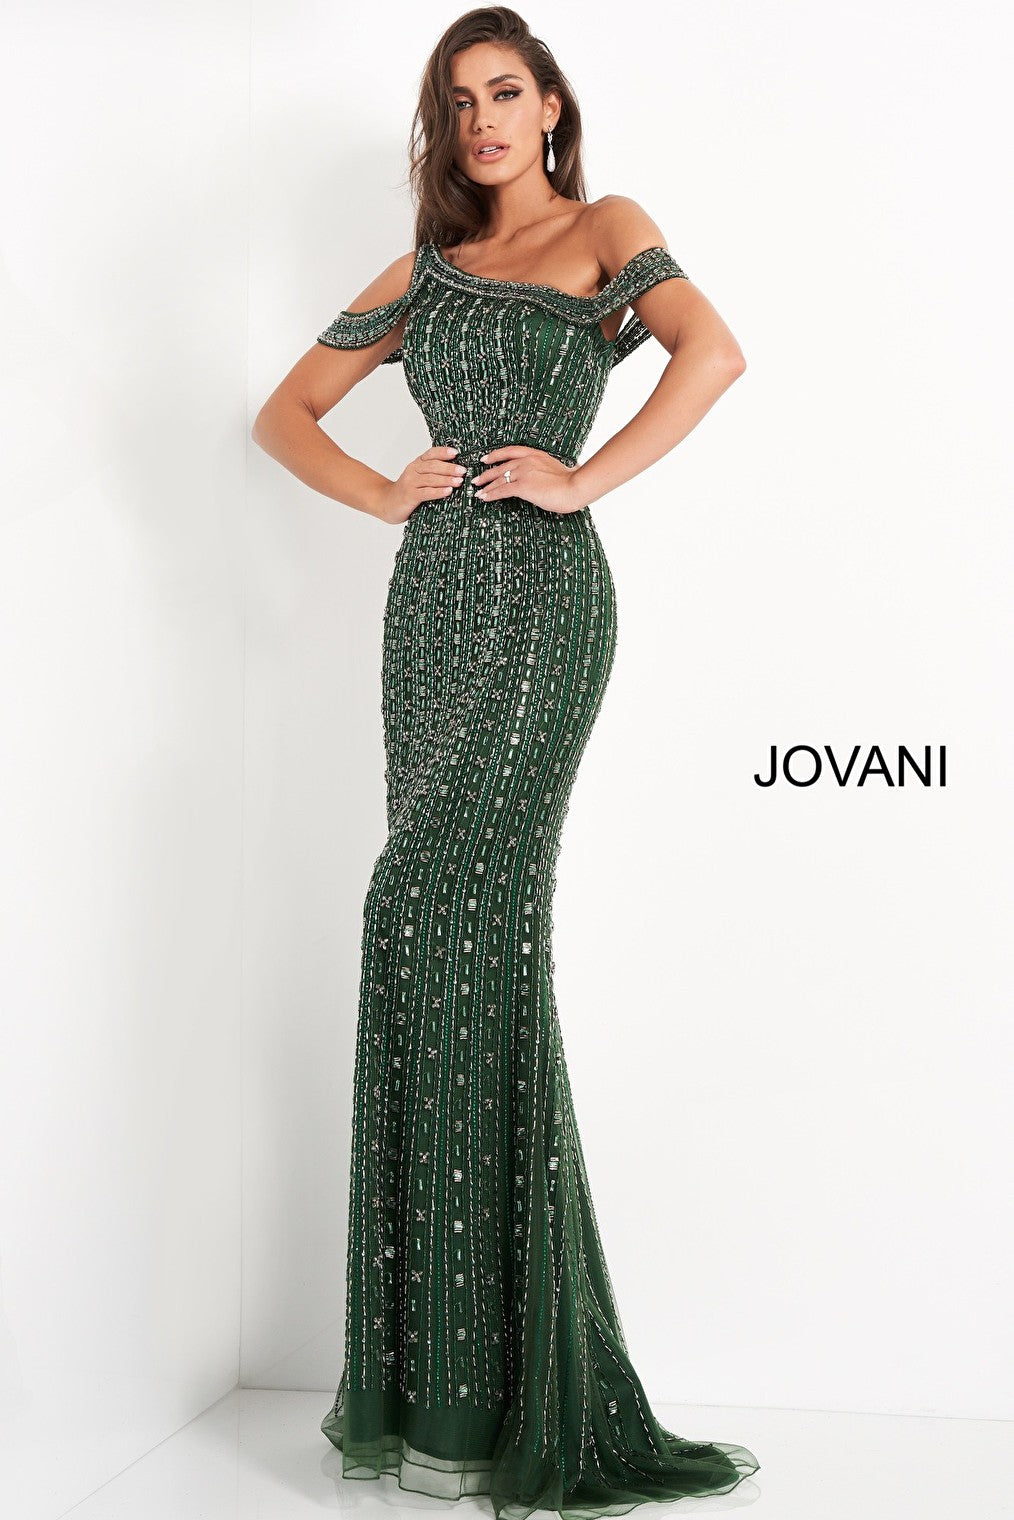 Beaded emerald Jovani evening dress 03124